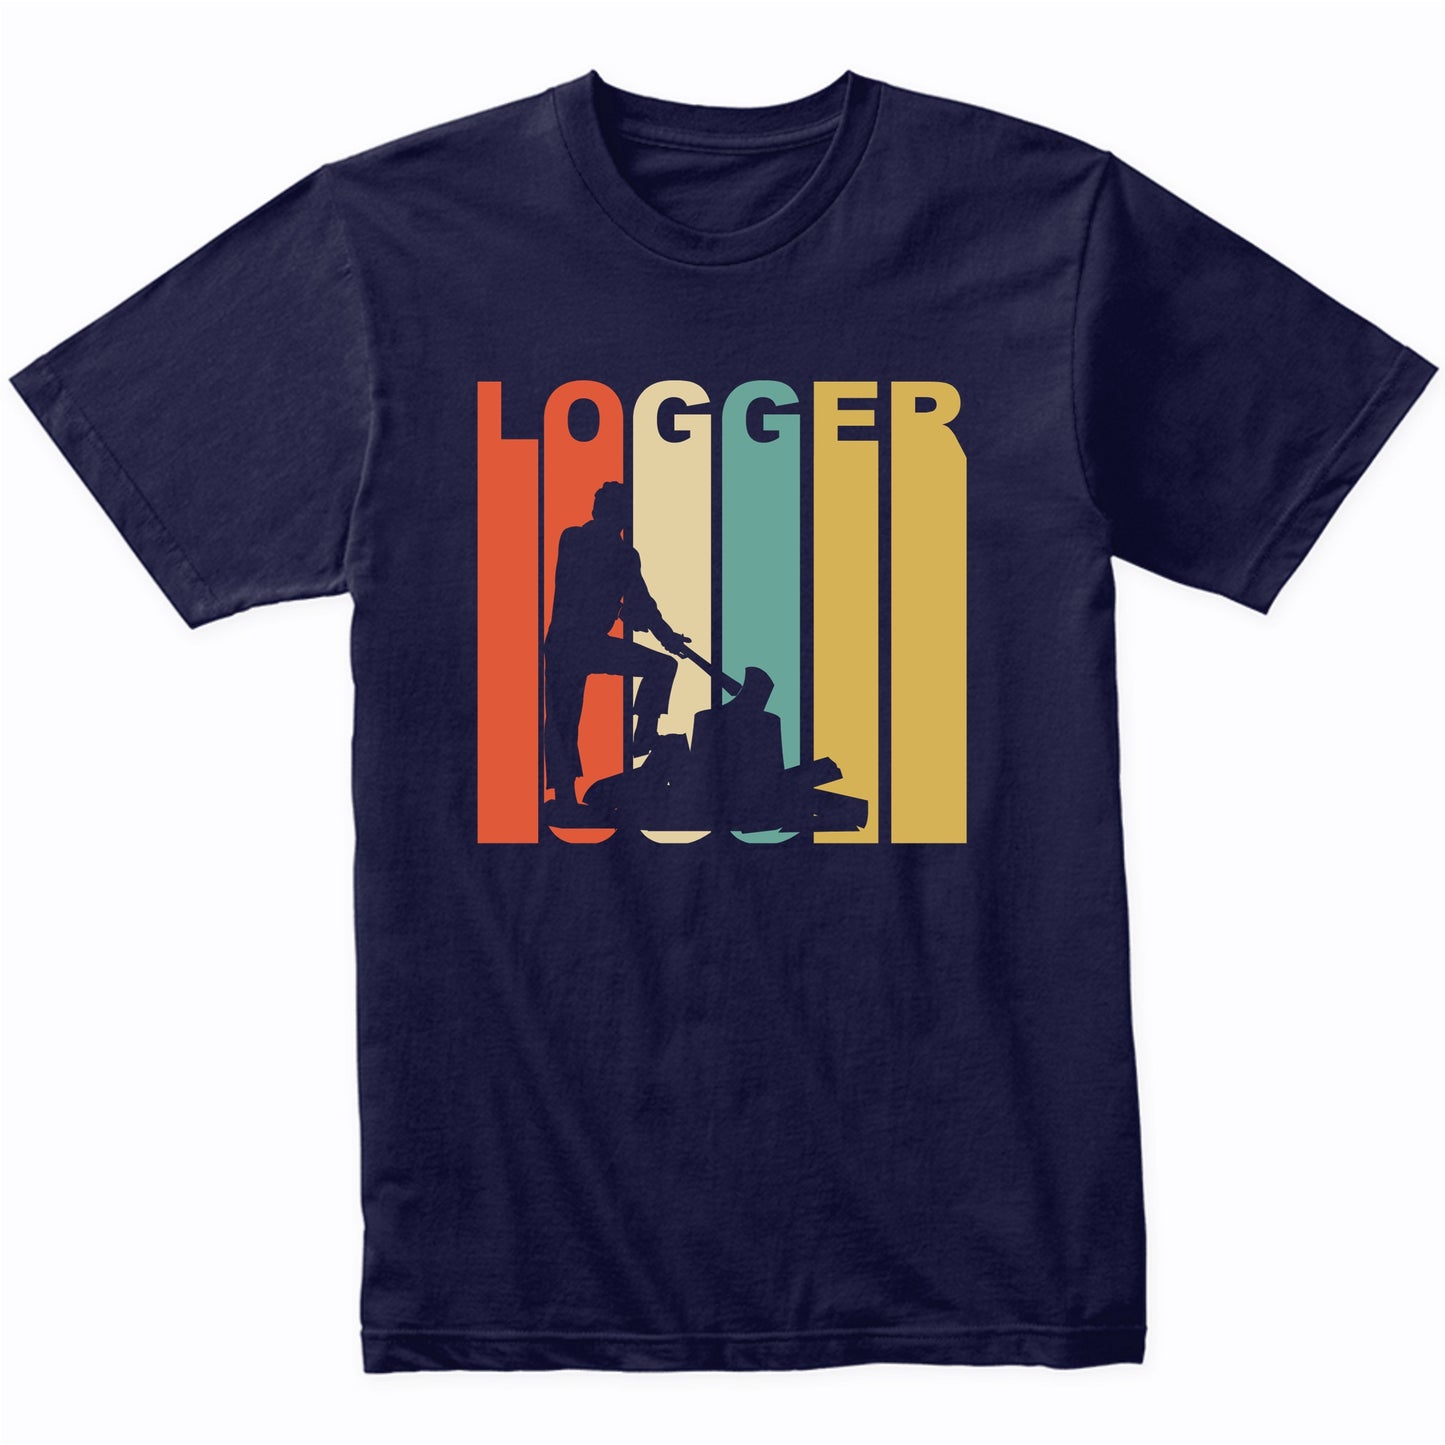 Retro 1970's Style Logger Silhouette Lumberjack T-Shirt